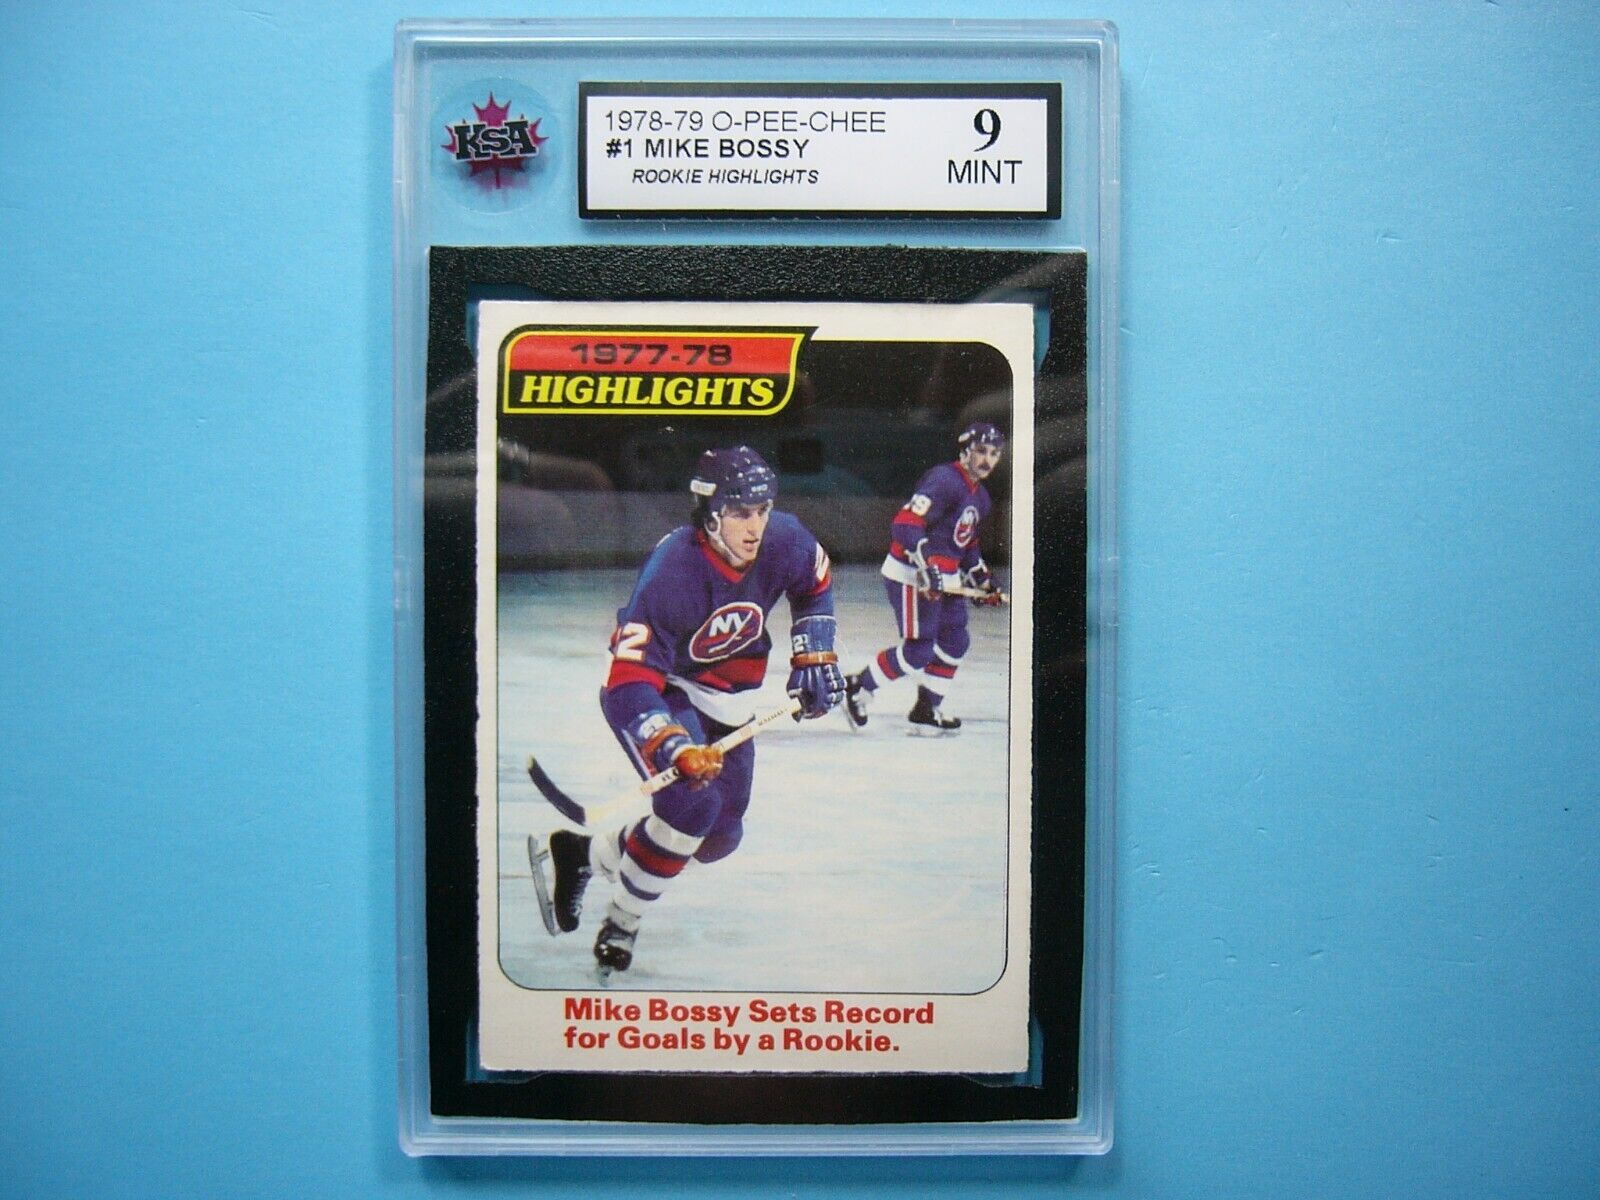 1978/79 O-PEE-CHEE NHL HOCKEY CARD #1 MIKE BOSSY ROOKIE RC RB KSA 9 MINT OPC